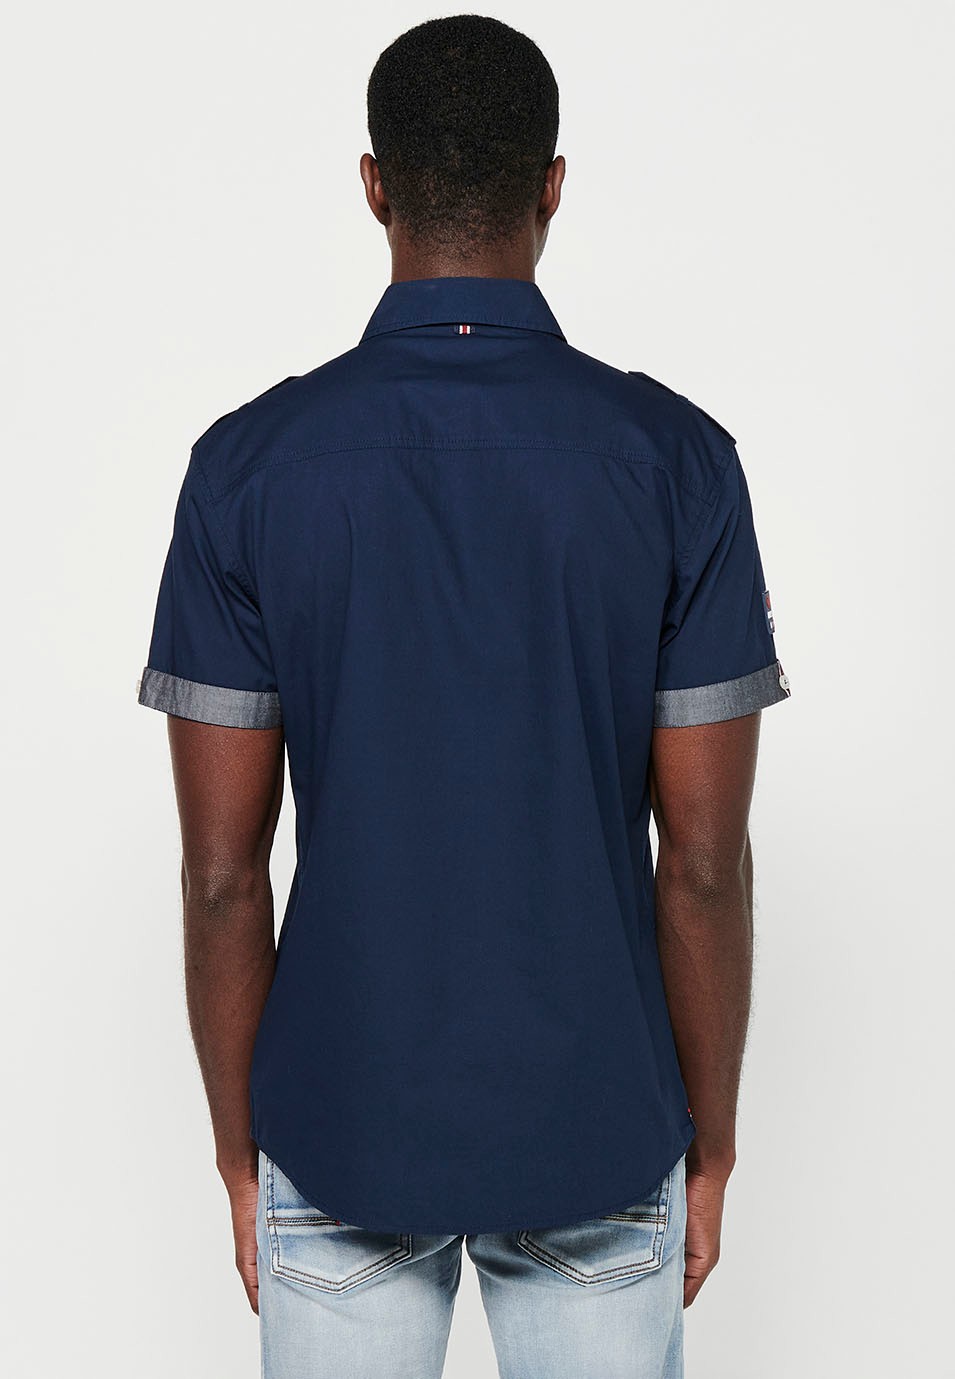 Camisa de algodon, manga corta, detalles hombro, color navy para hombre 6